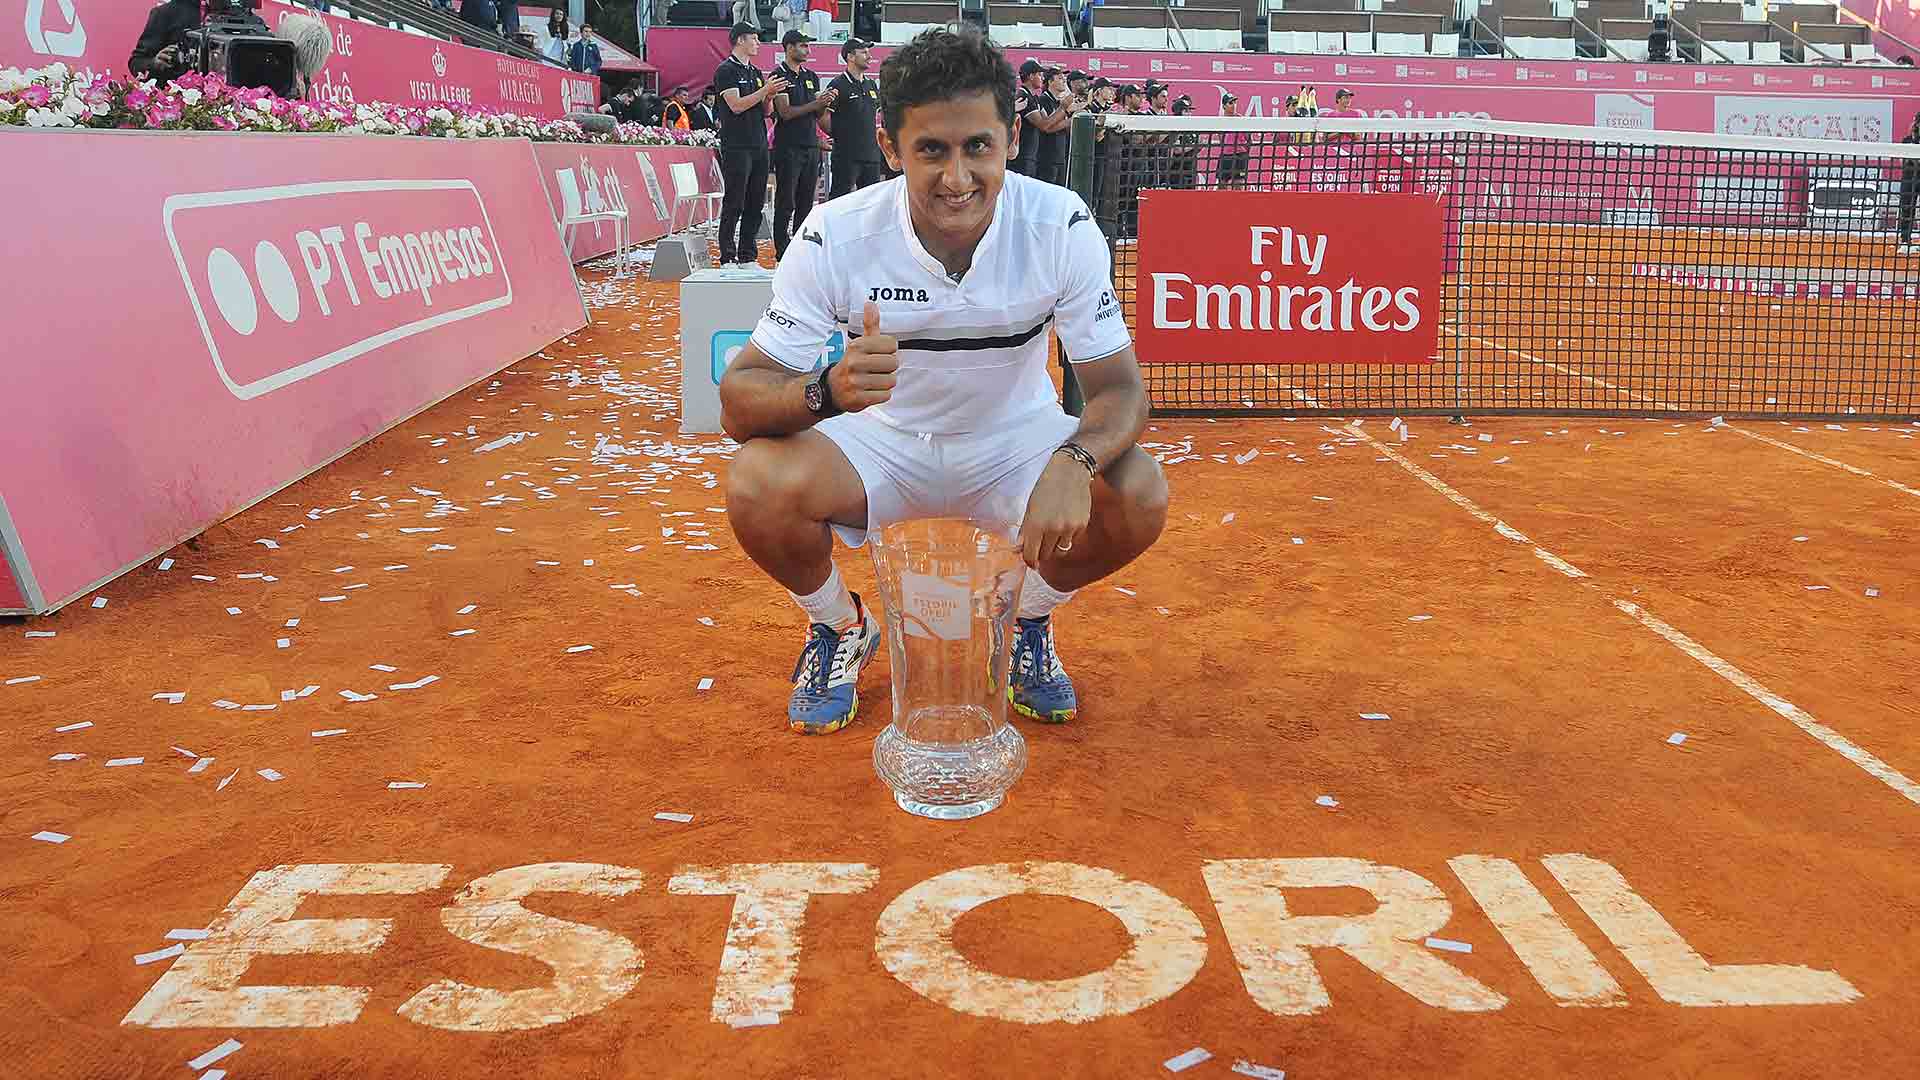 Carreno Busta Almagro Estoril 2016 Final ATP Tour Tennis